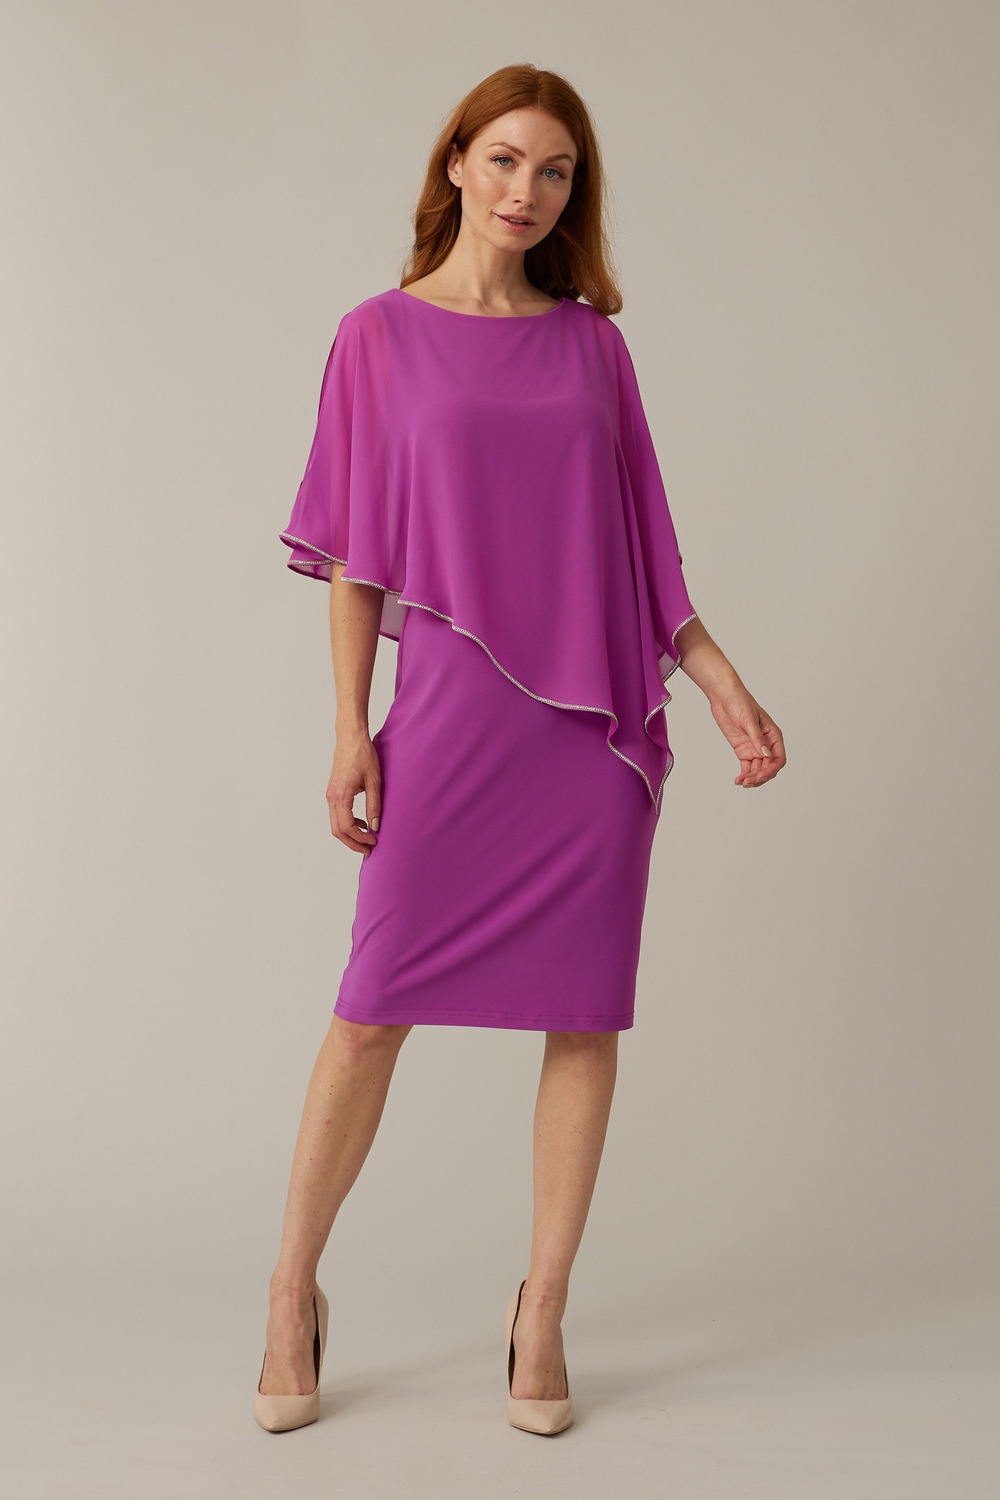 Joseph Ribkoff Layered Dress Style 221062 NOW 223762. Sparkling Grape